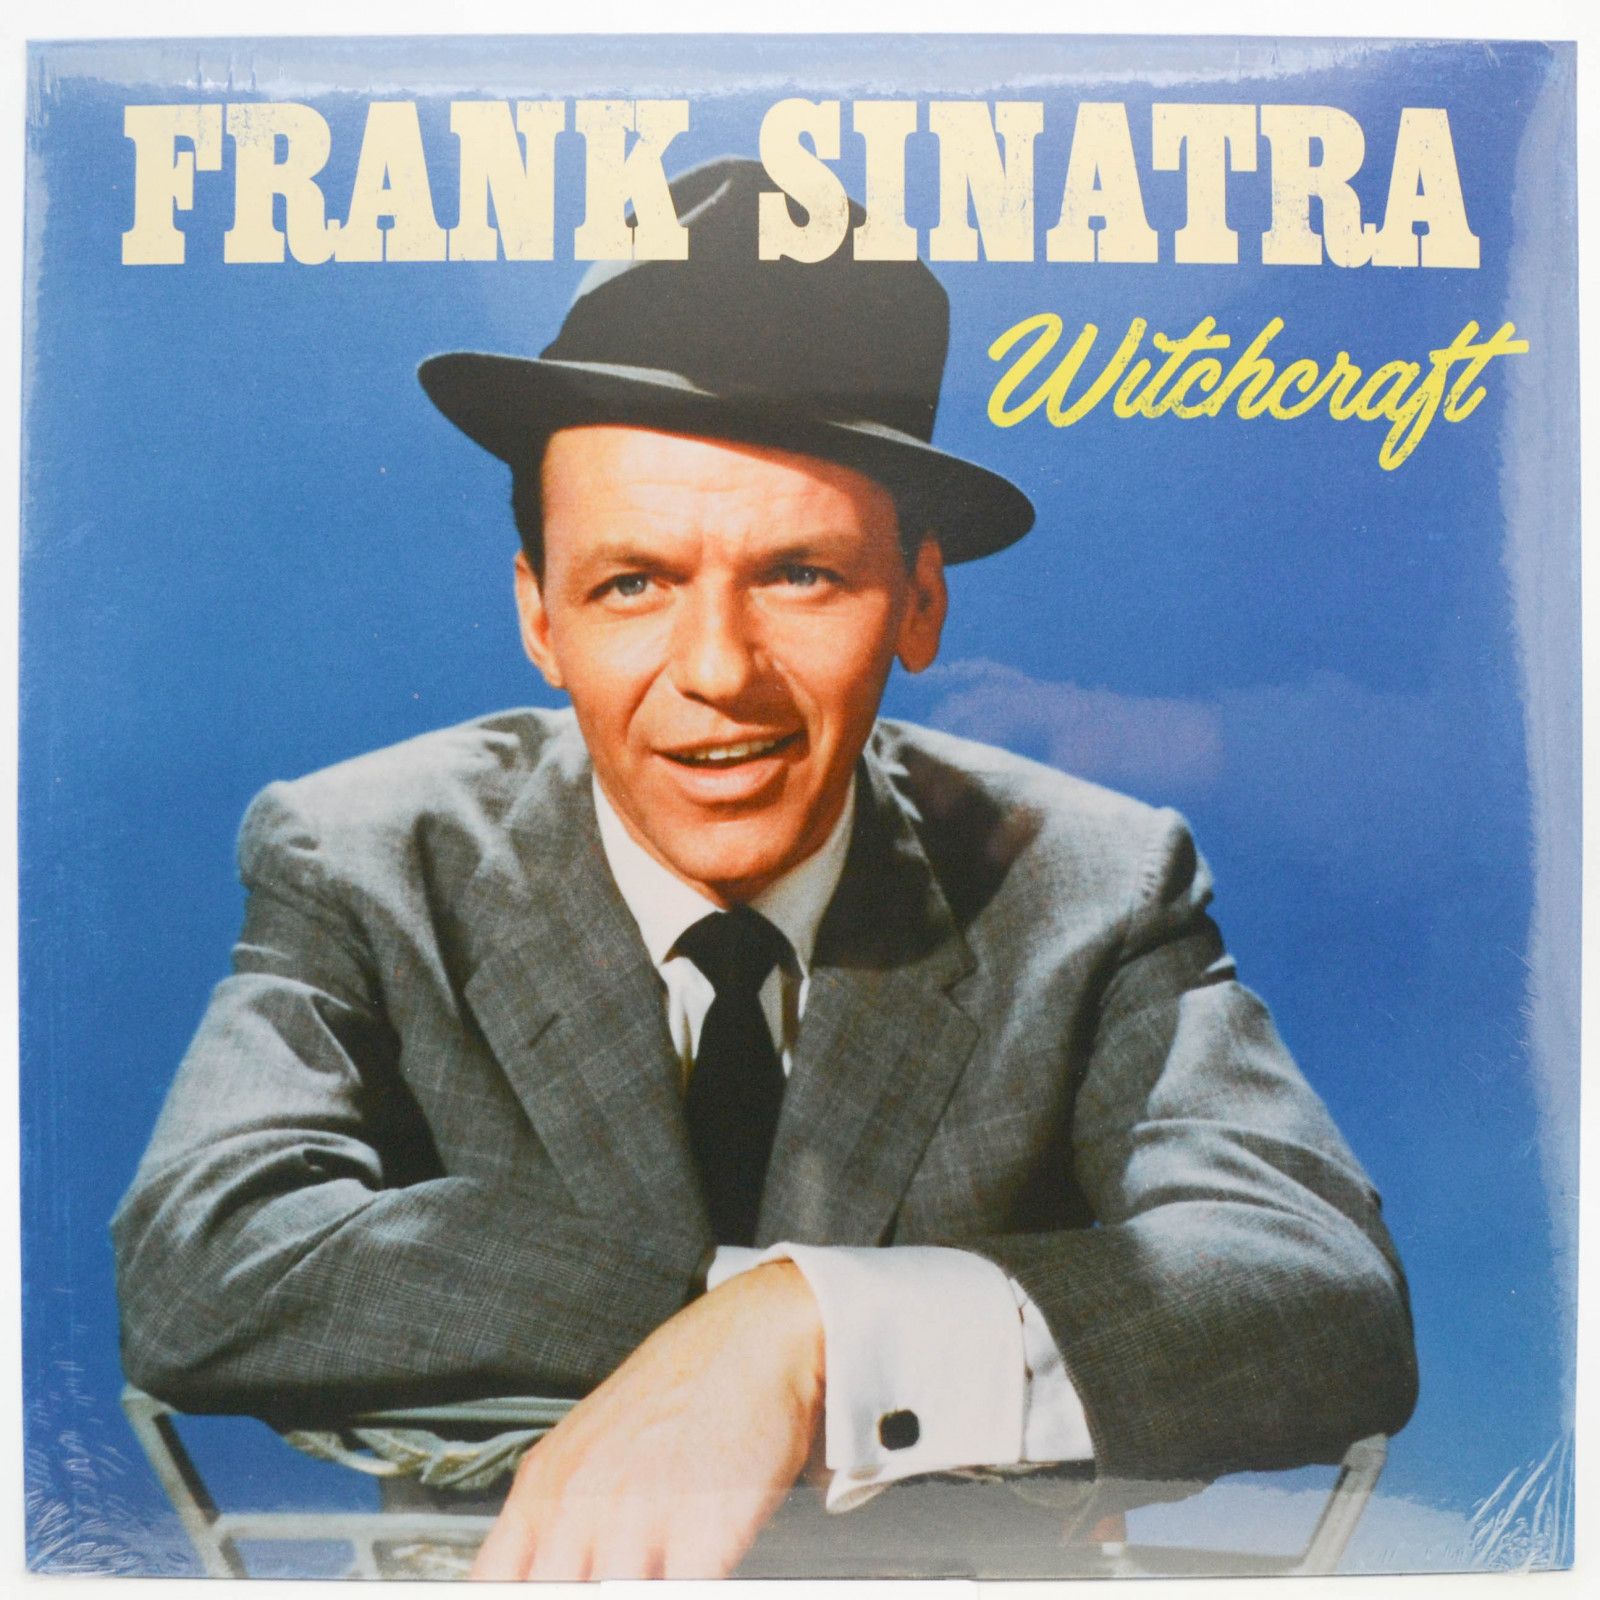 Frank Sinatra — Witchcraft, 1957